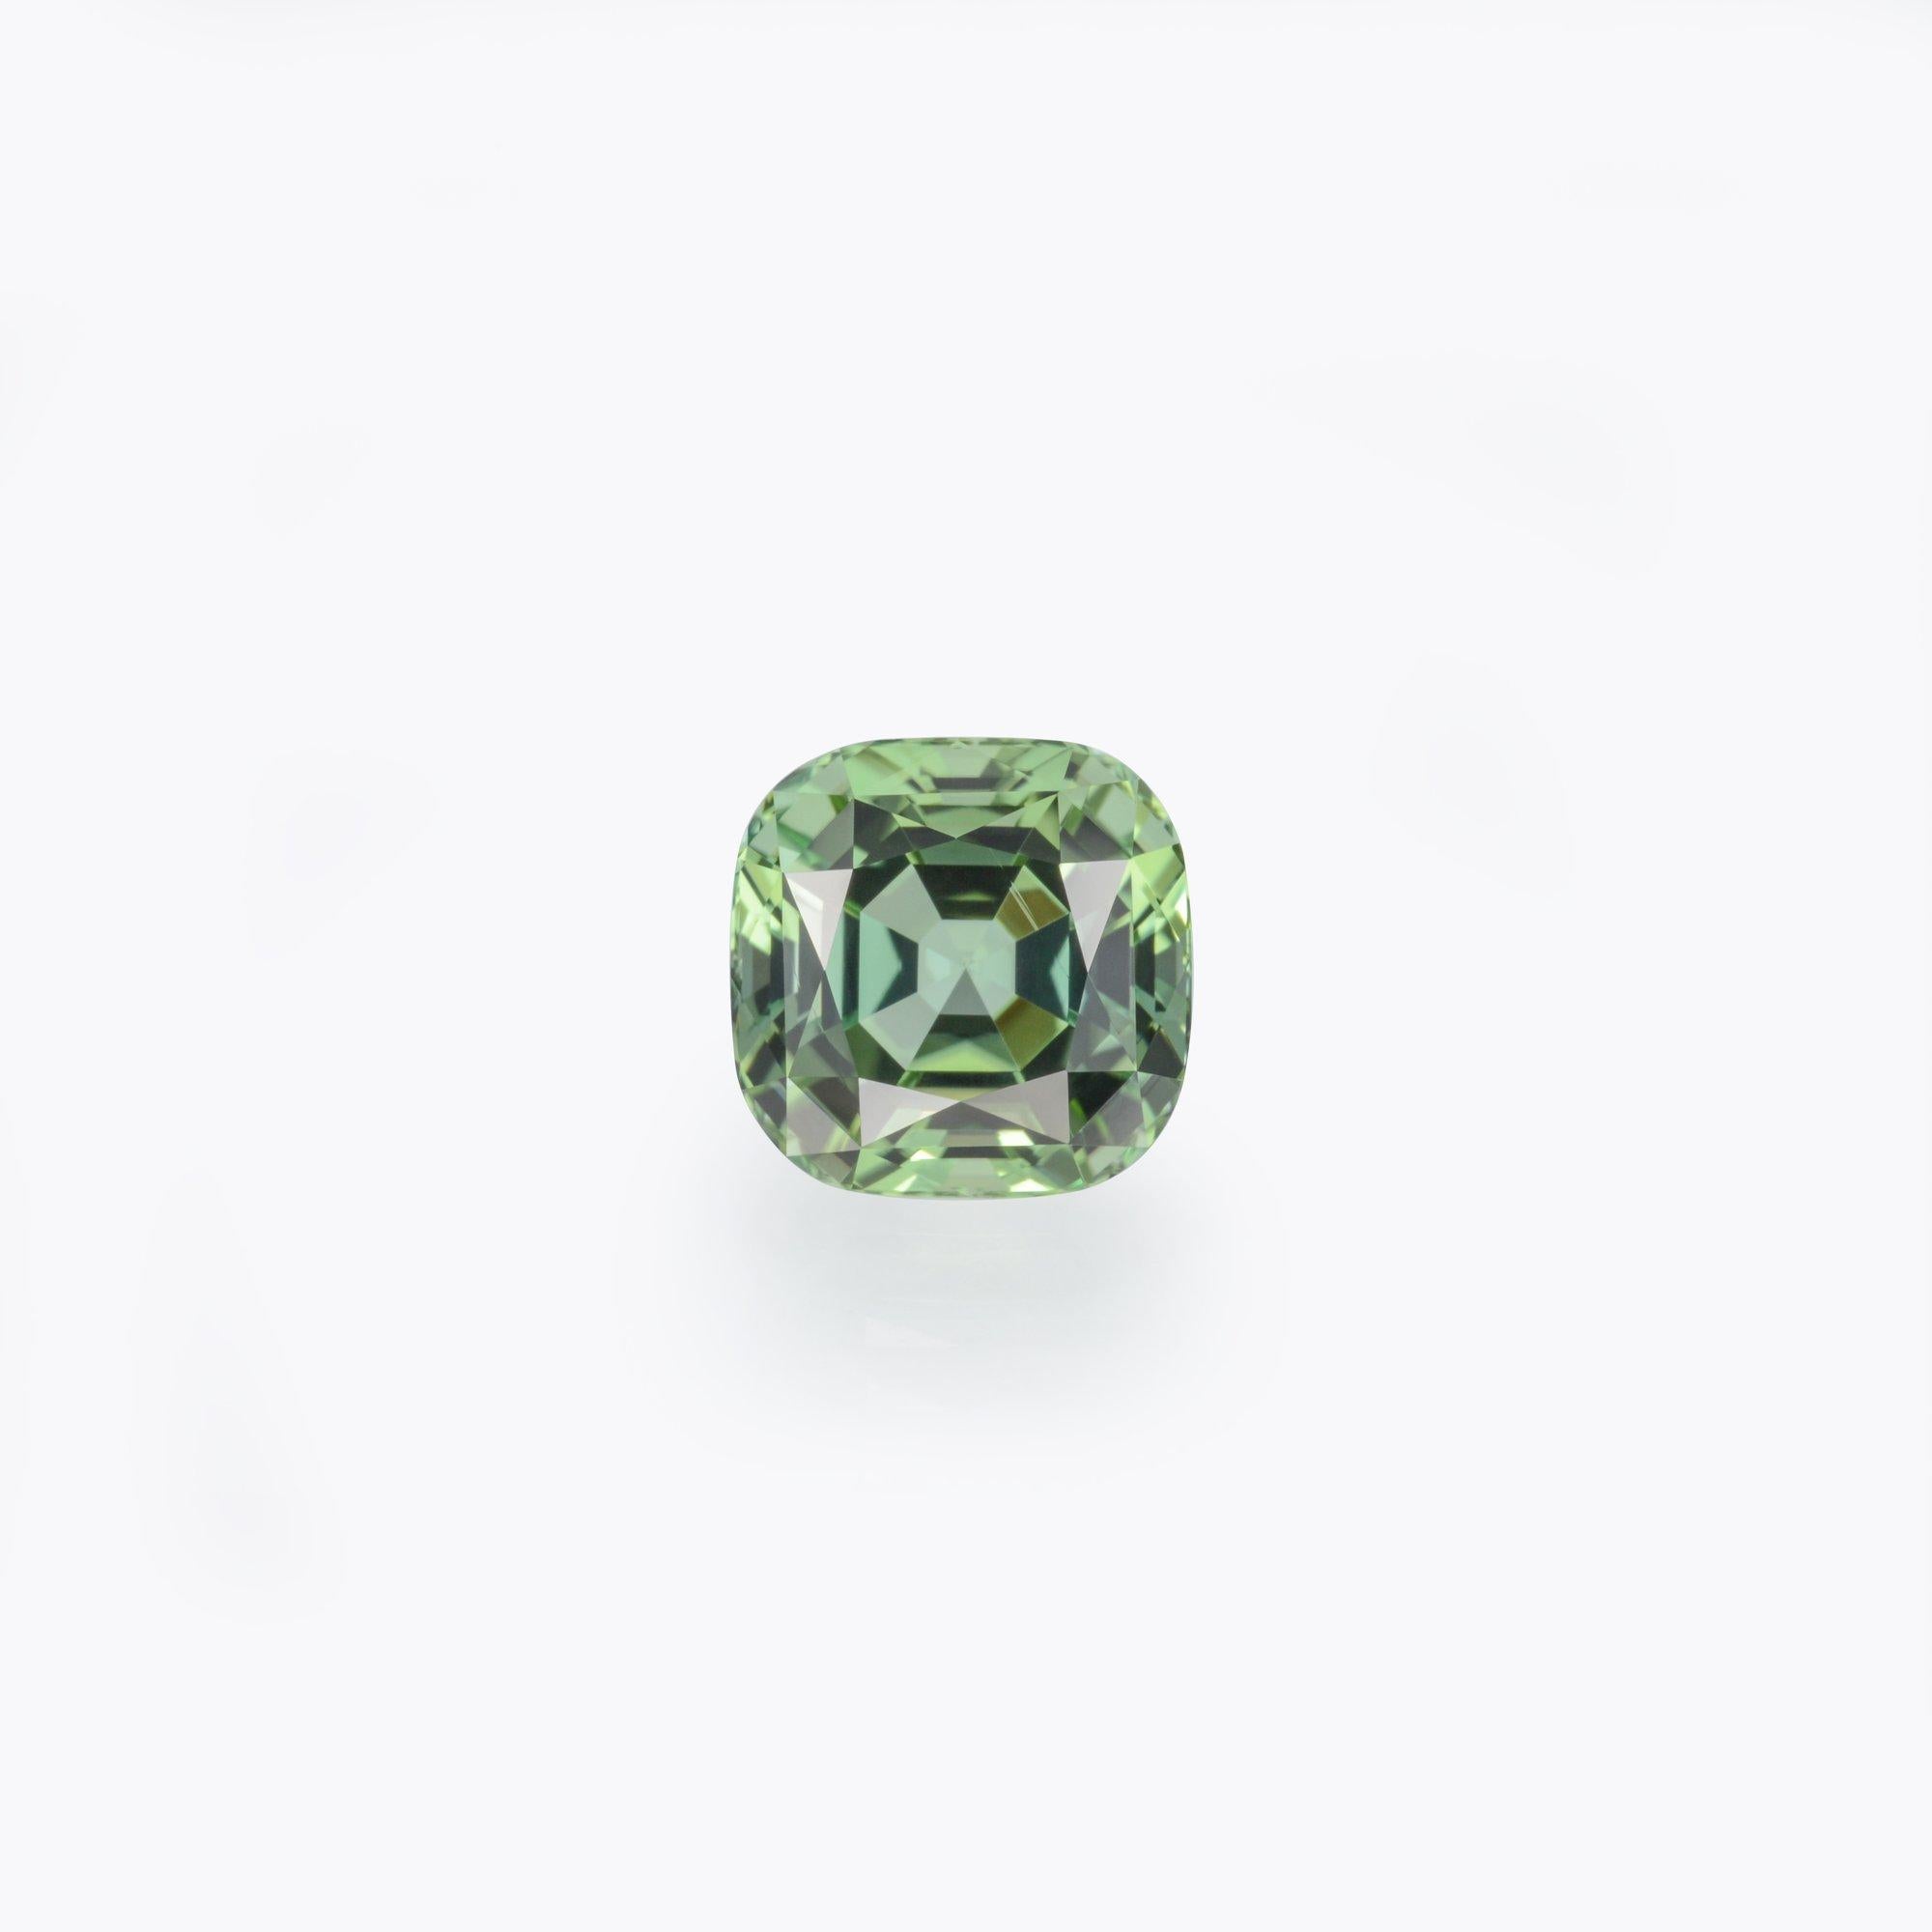 Cushion Cut Green Tourmaline Ring Gem 5.27 Carat Loose Gemstone